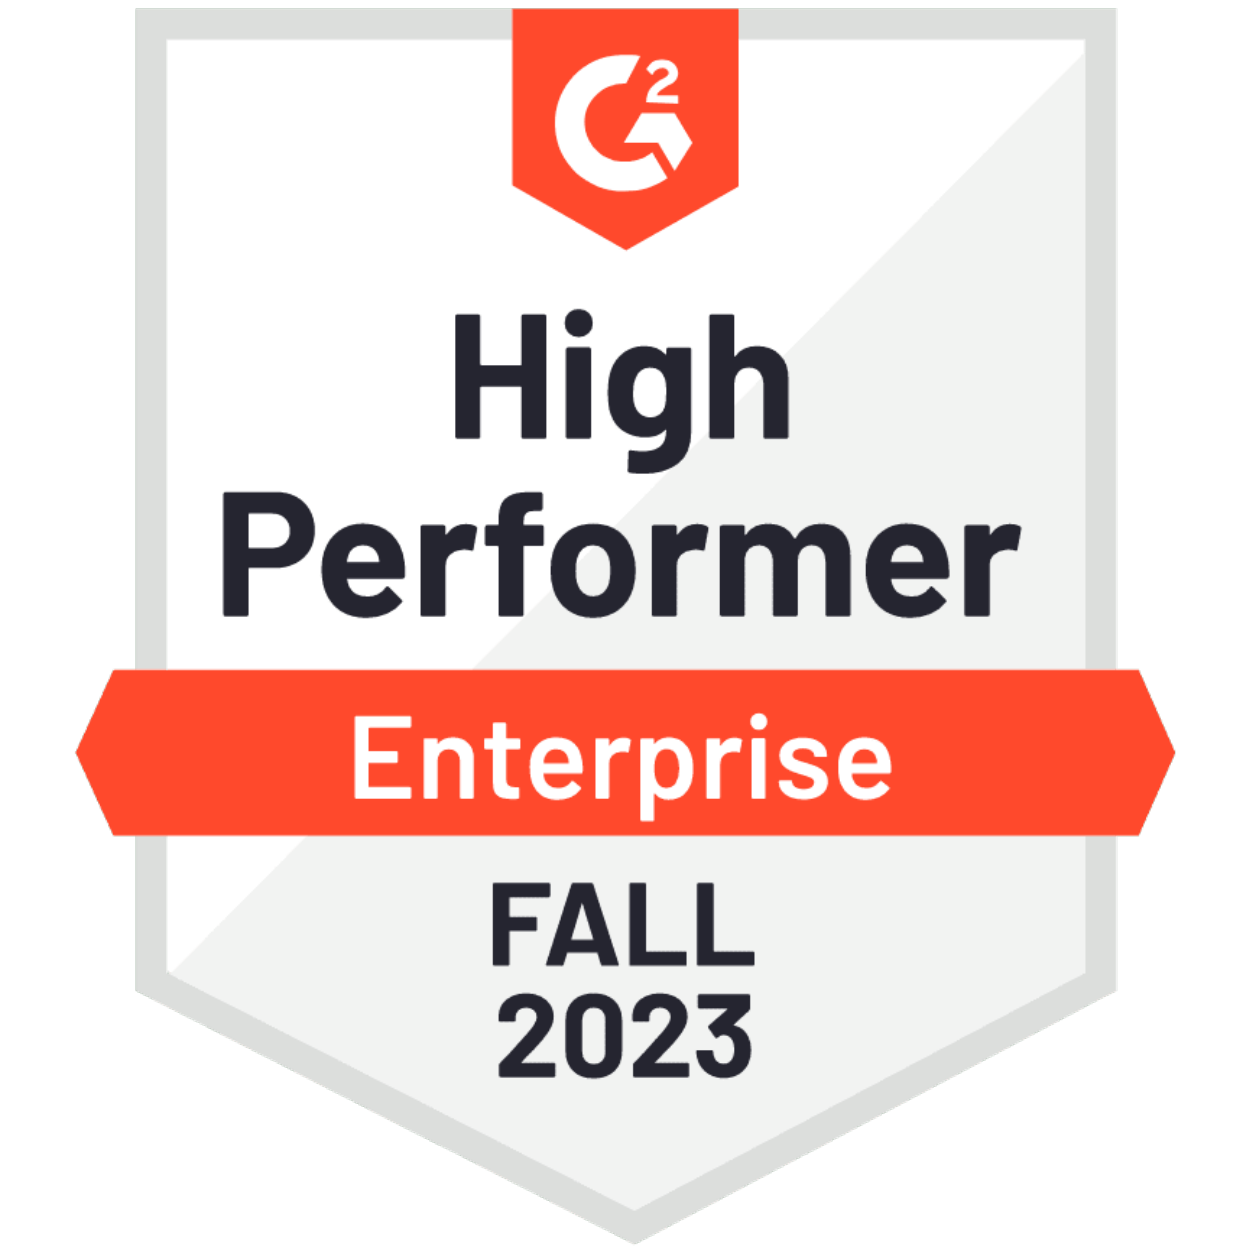 High_Performer_Enterprise_Fall_2023_600_600_nobg